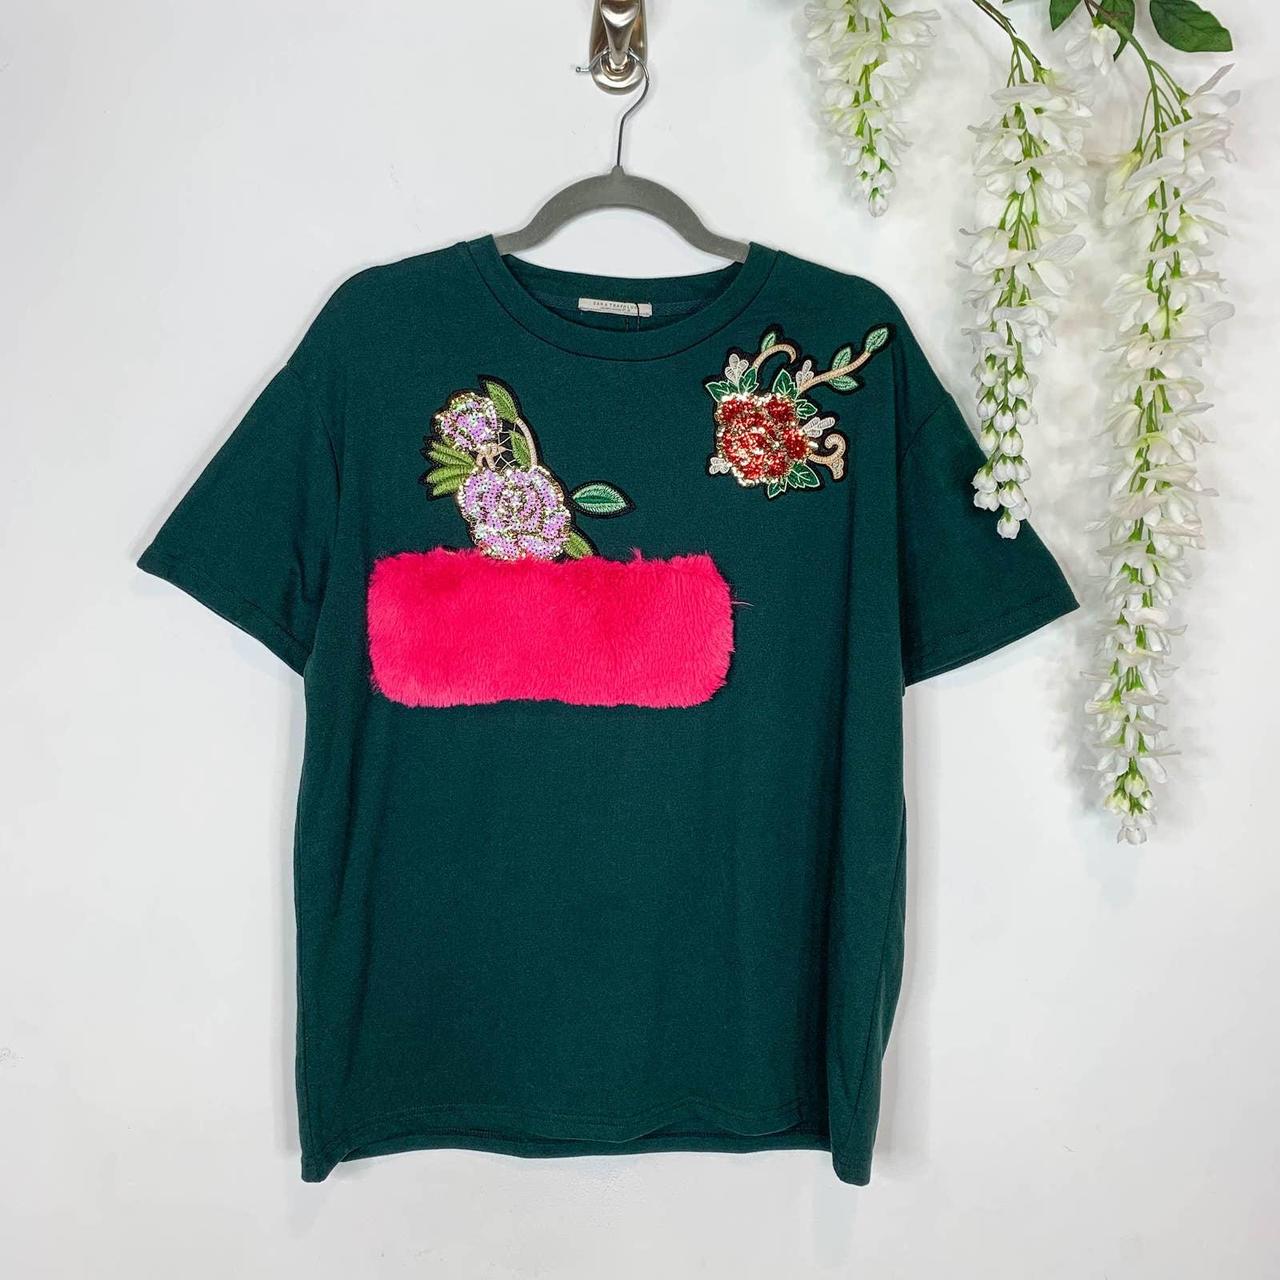 Zara Embroidered T-Shirt